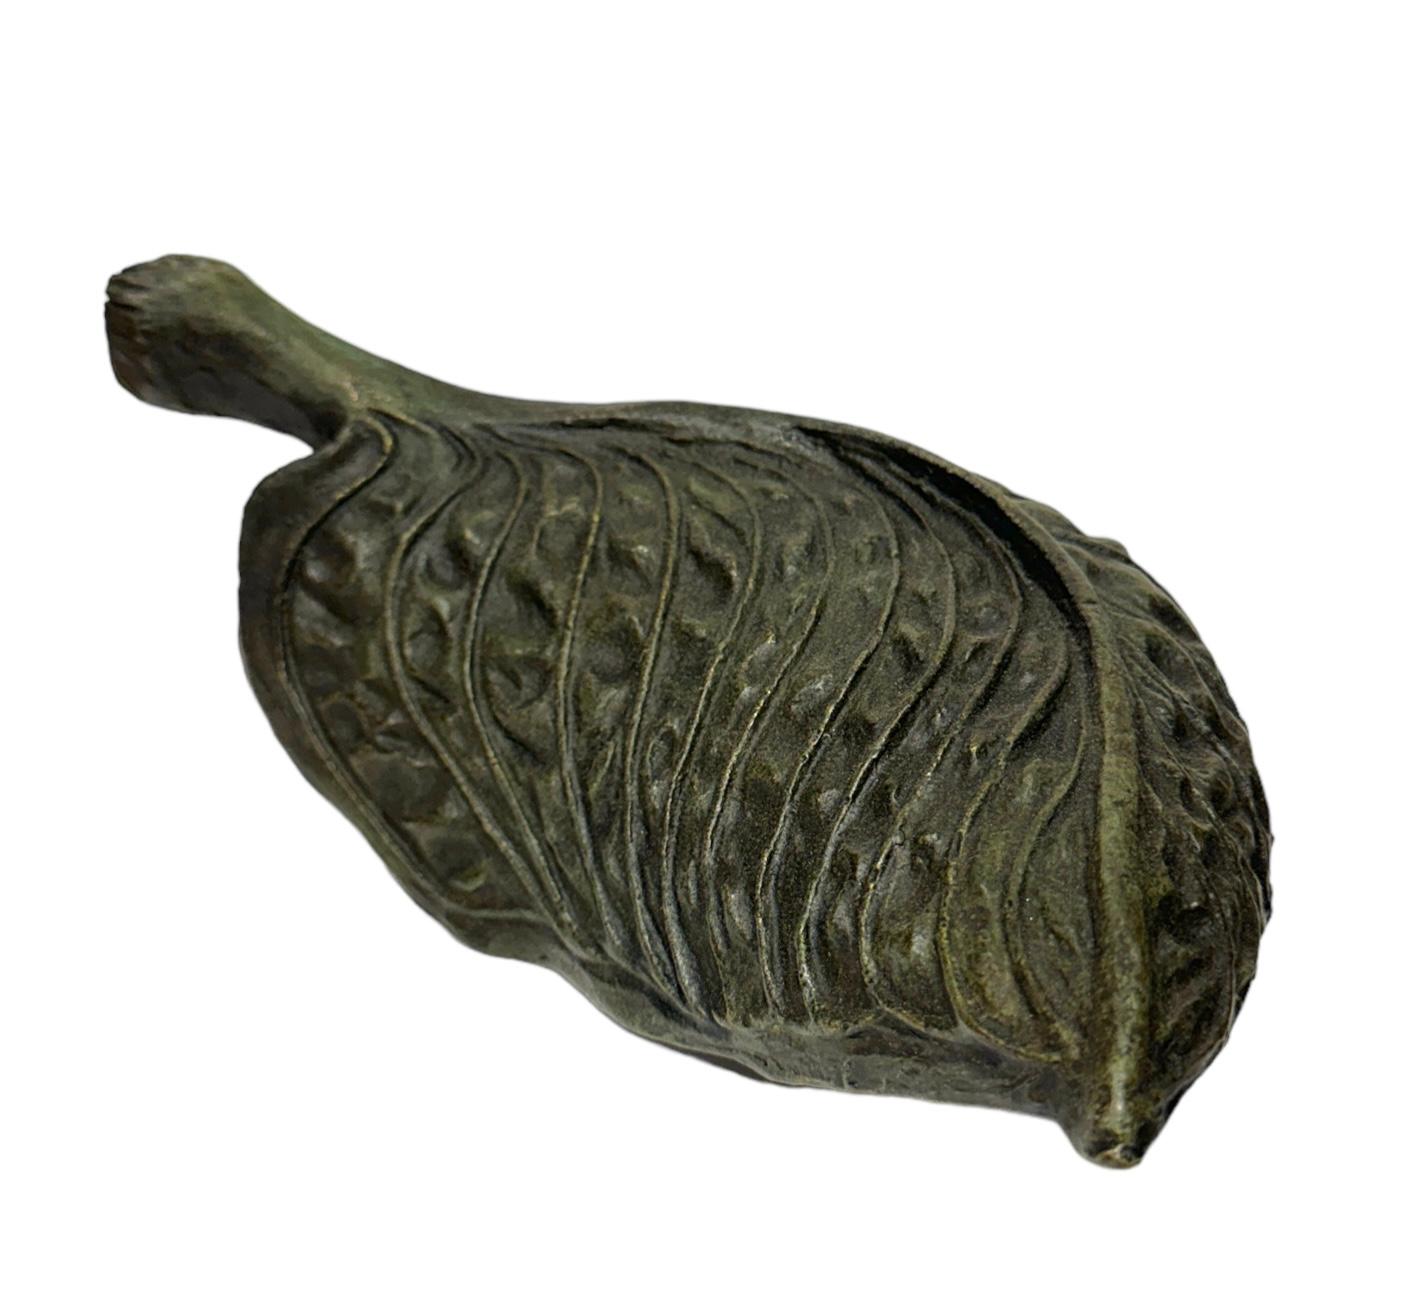 American Hosta Leaf, Small Scale Cast Bronze Botanical Sculpture with Subtle Patina For Sale